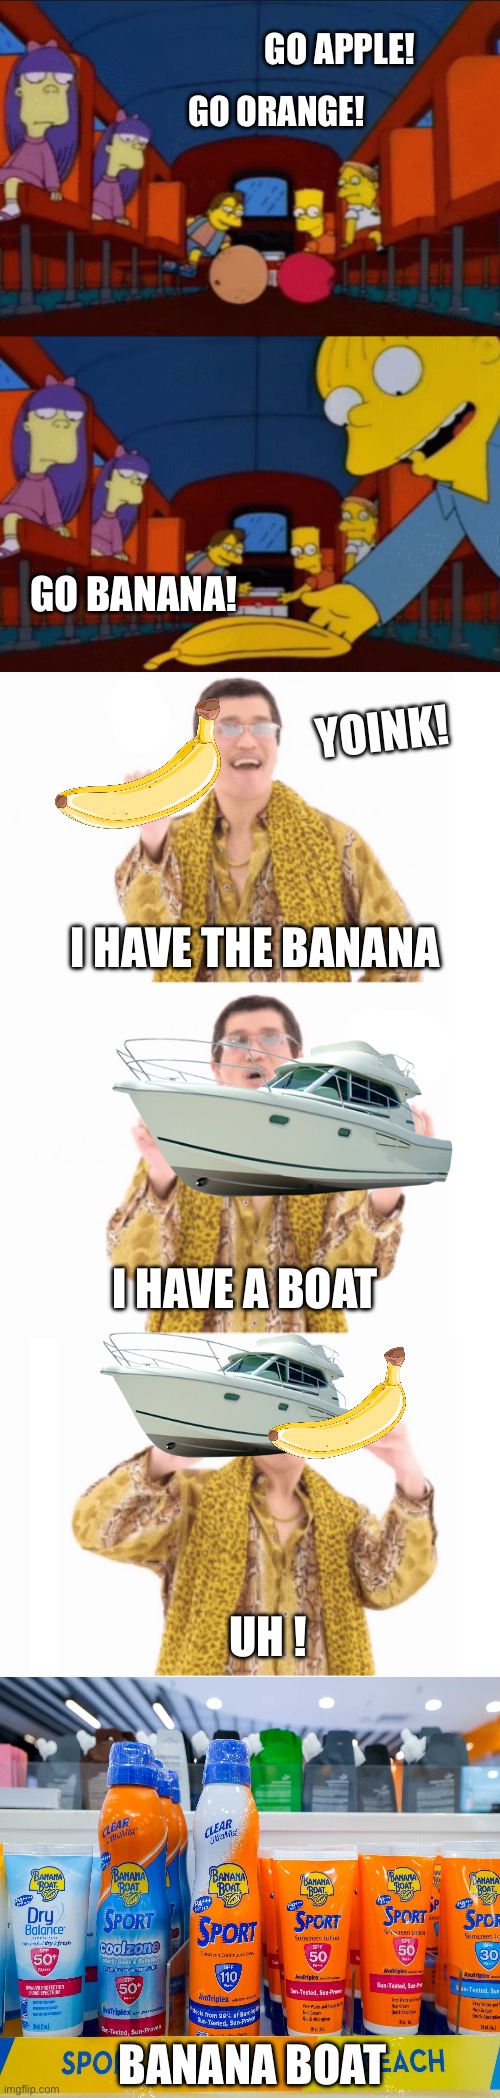 Go Banana Boat! | GO APPLE! GO ORANGE! GO BANANA! YOINK! I HAVE THE BANANA; I HAVE A BOAT; UH ! BANANA BOAT | image tagged in go apple go orange go banana simpsons,pen pinapple apple pen,ppap,banana,the simpsons,banana boat | made w/ Imgflip meme maker